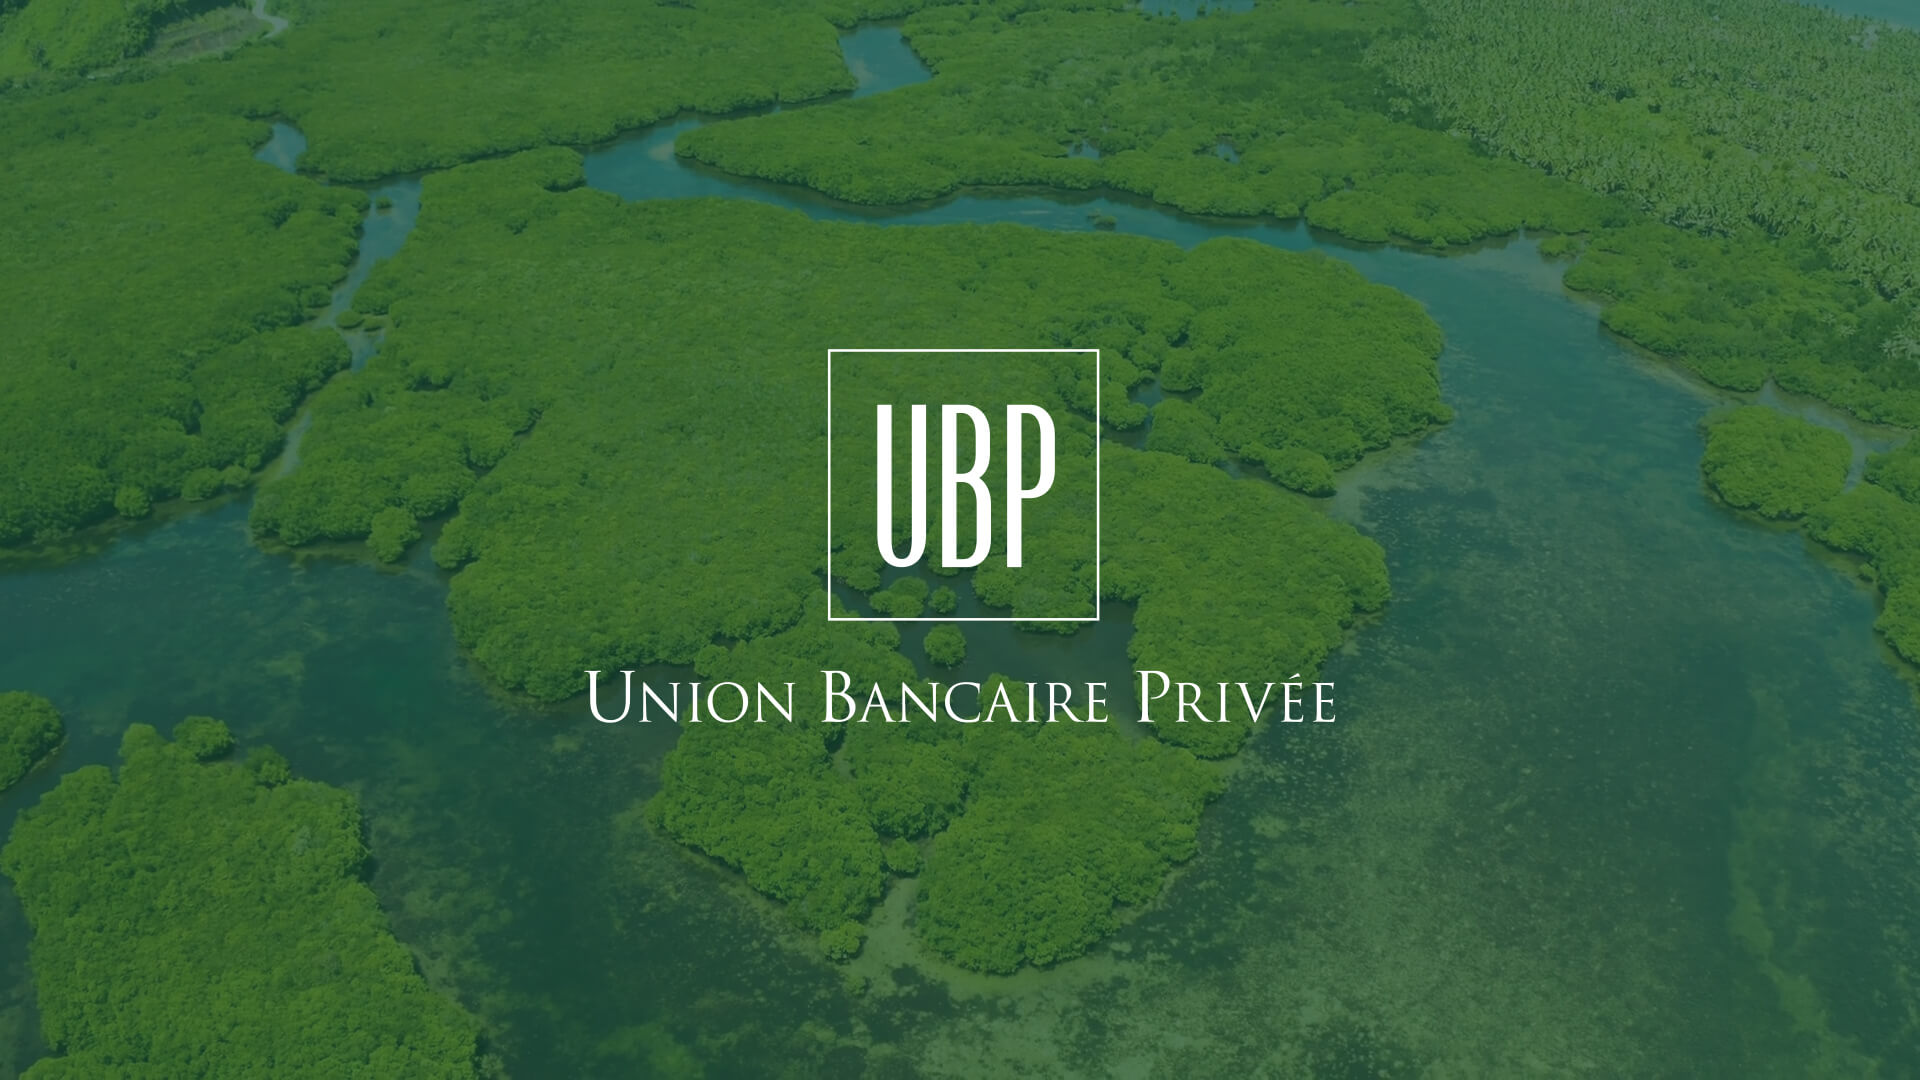 Cover image for post: Union Bancaire Privée (UBP)